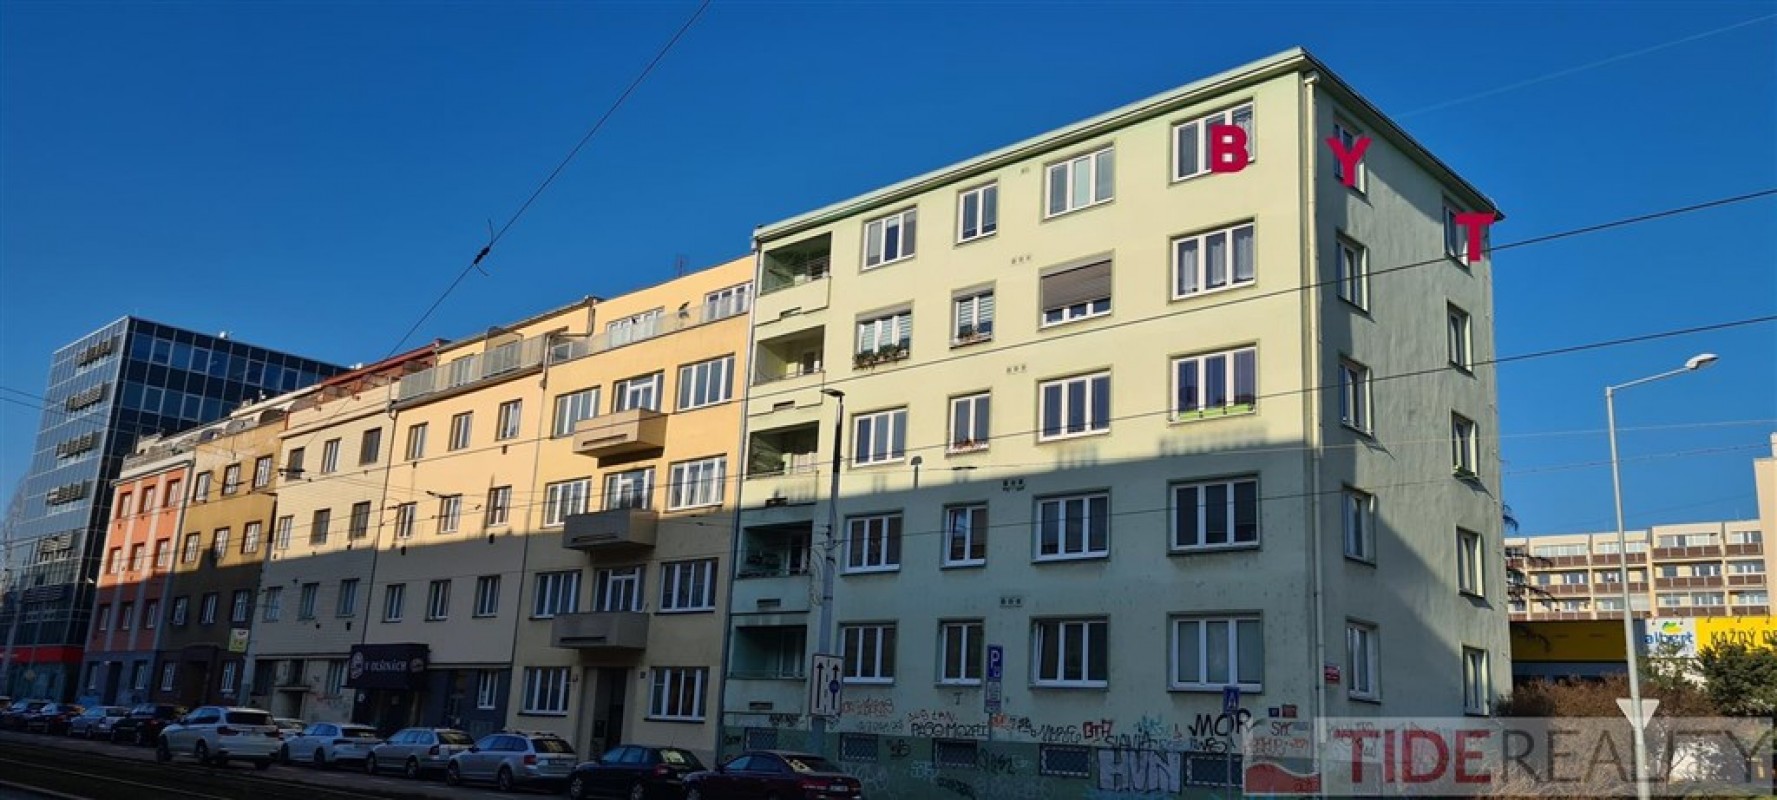 Prodej bytu 2+1, 4.patro, V Olšinách, P10 Vršovice